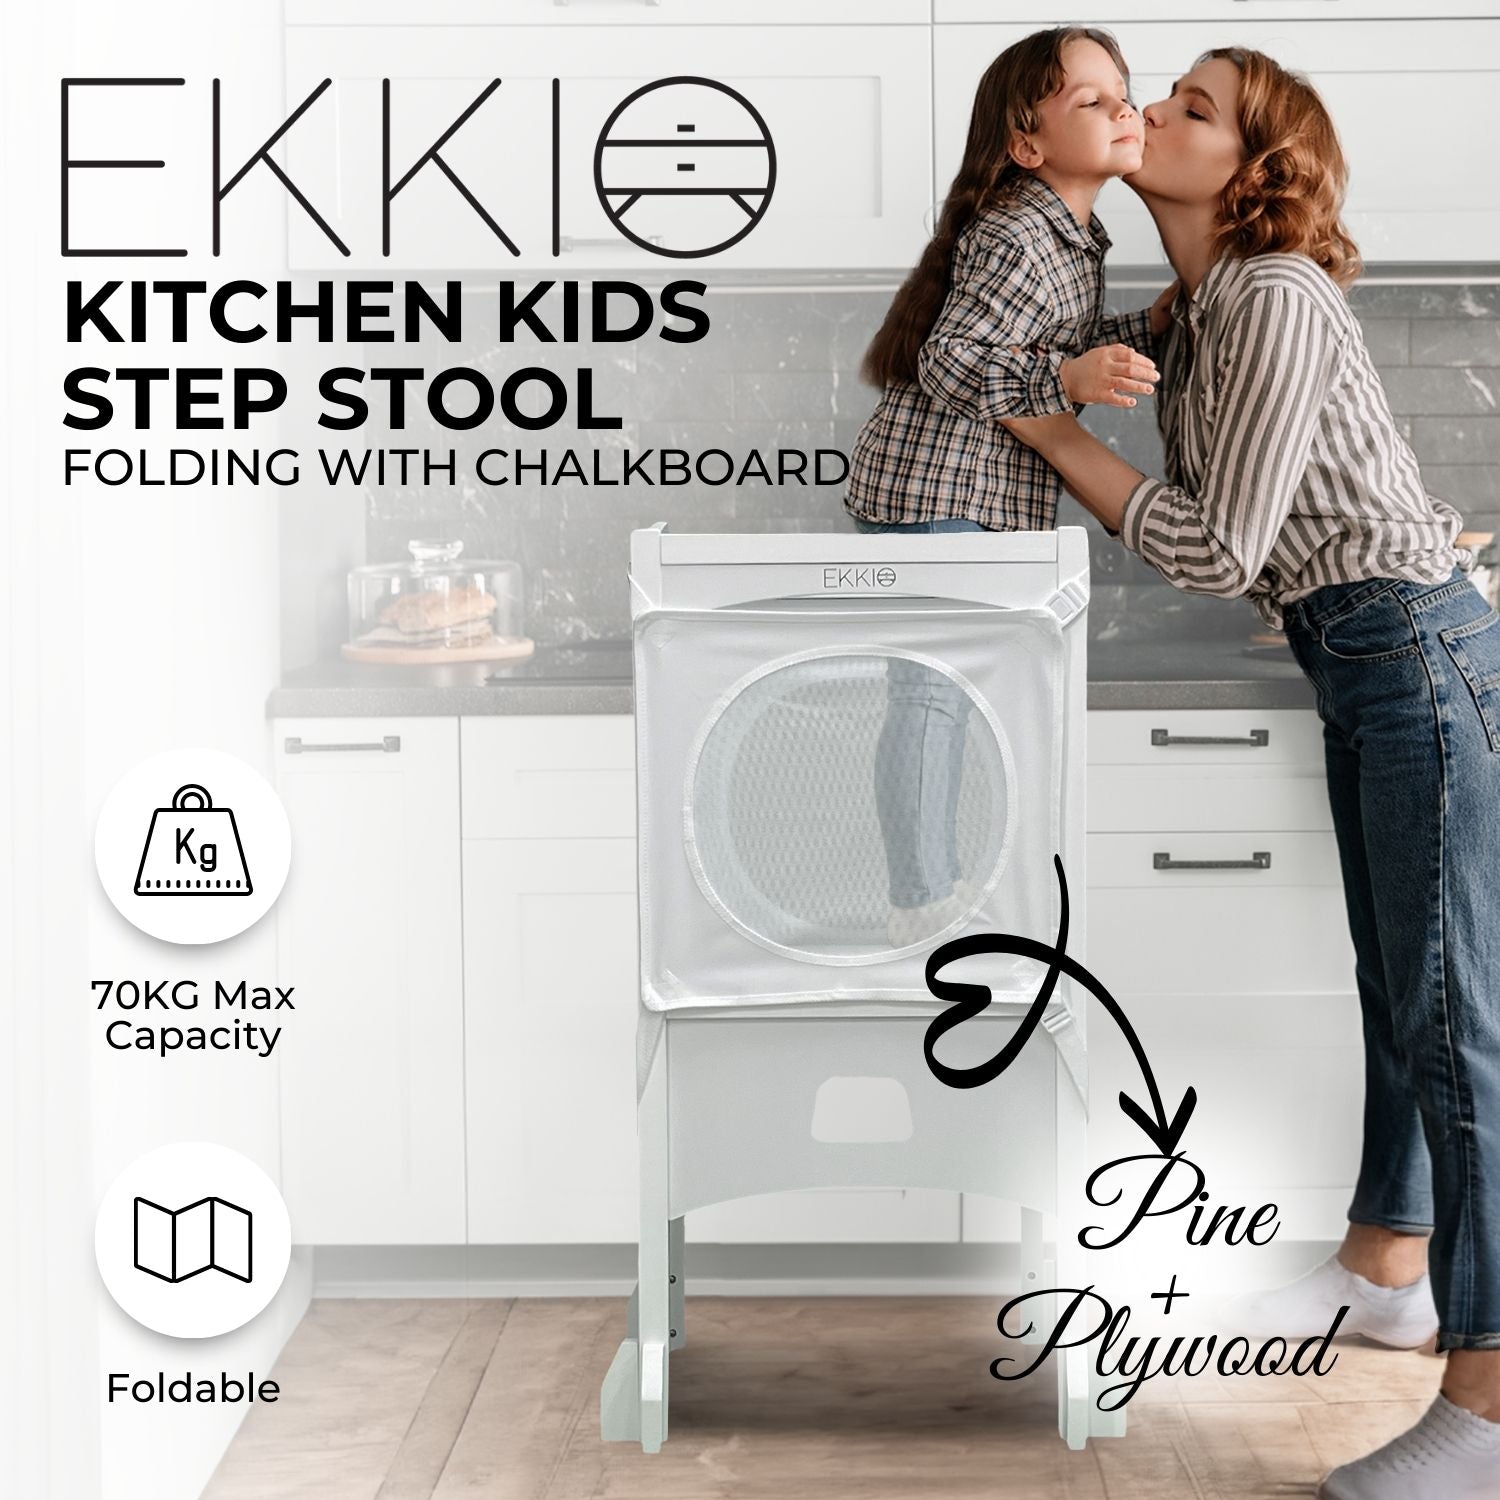 EKKIO Folding Kitchen Kids Step Stool with Chalkboard- Saturn, Moon, Square and Star Shape Design (White) (Without Toy) EK-KSS-102-LFA - SILBERSHELL